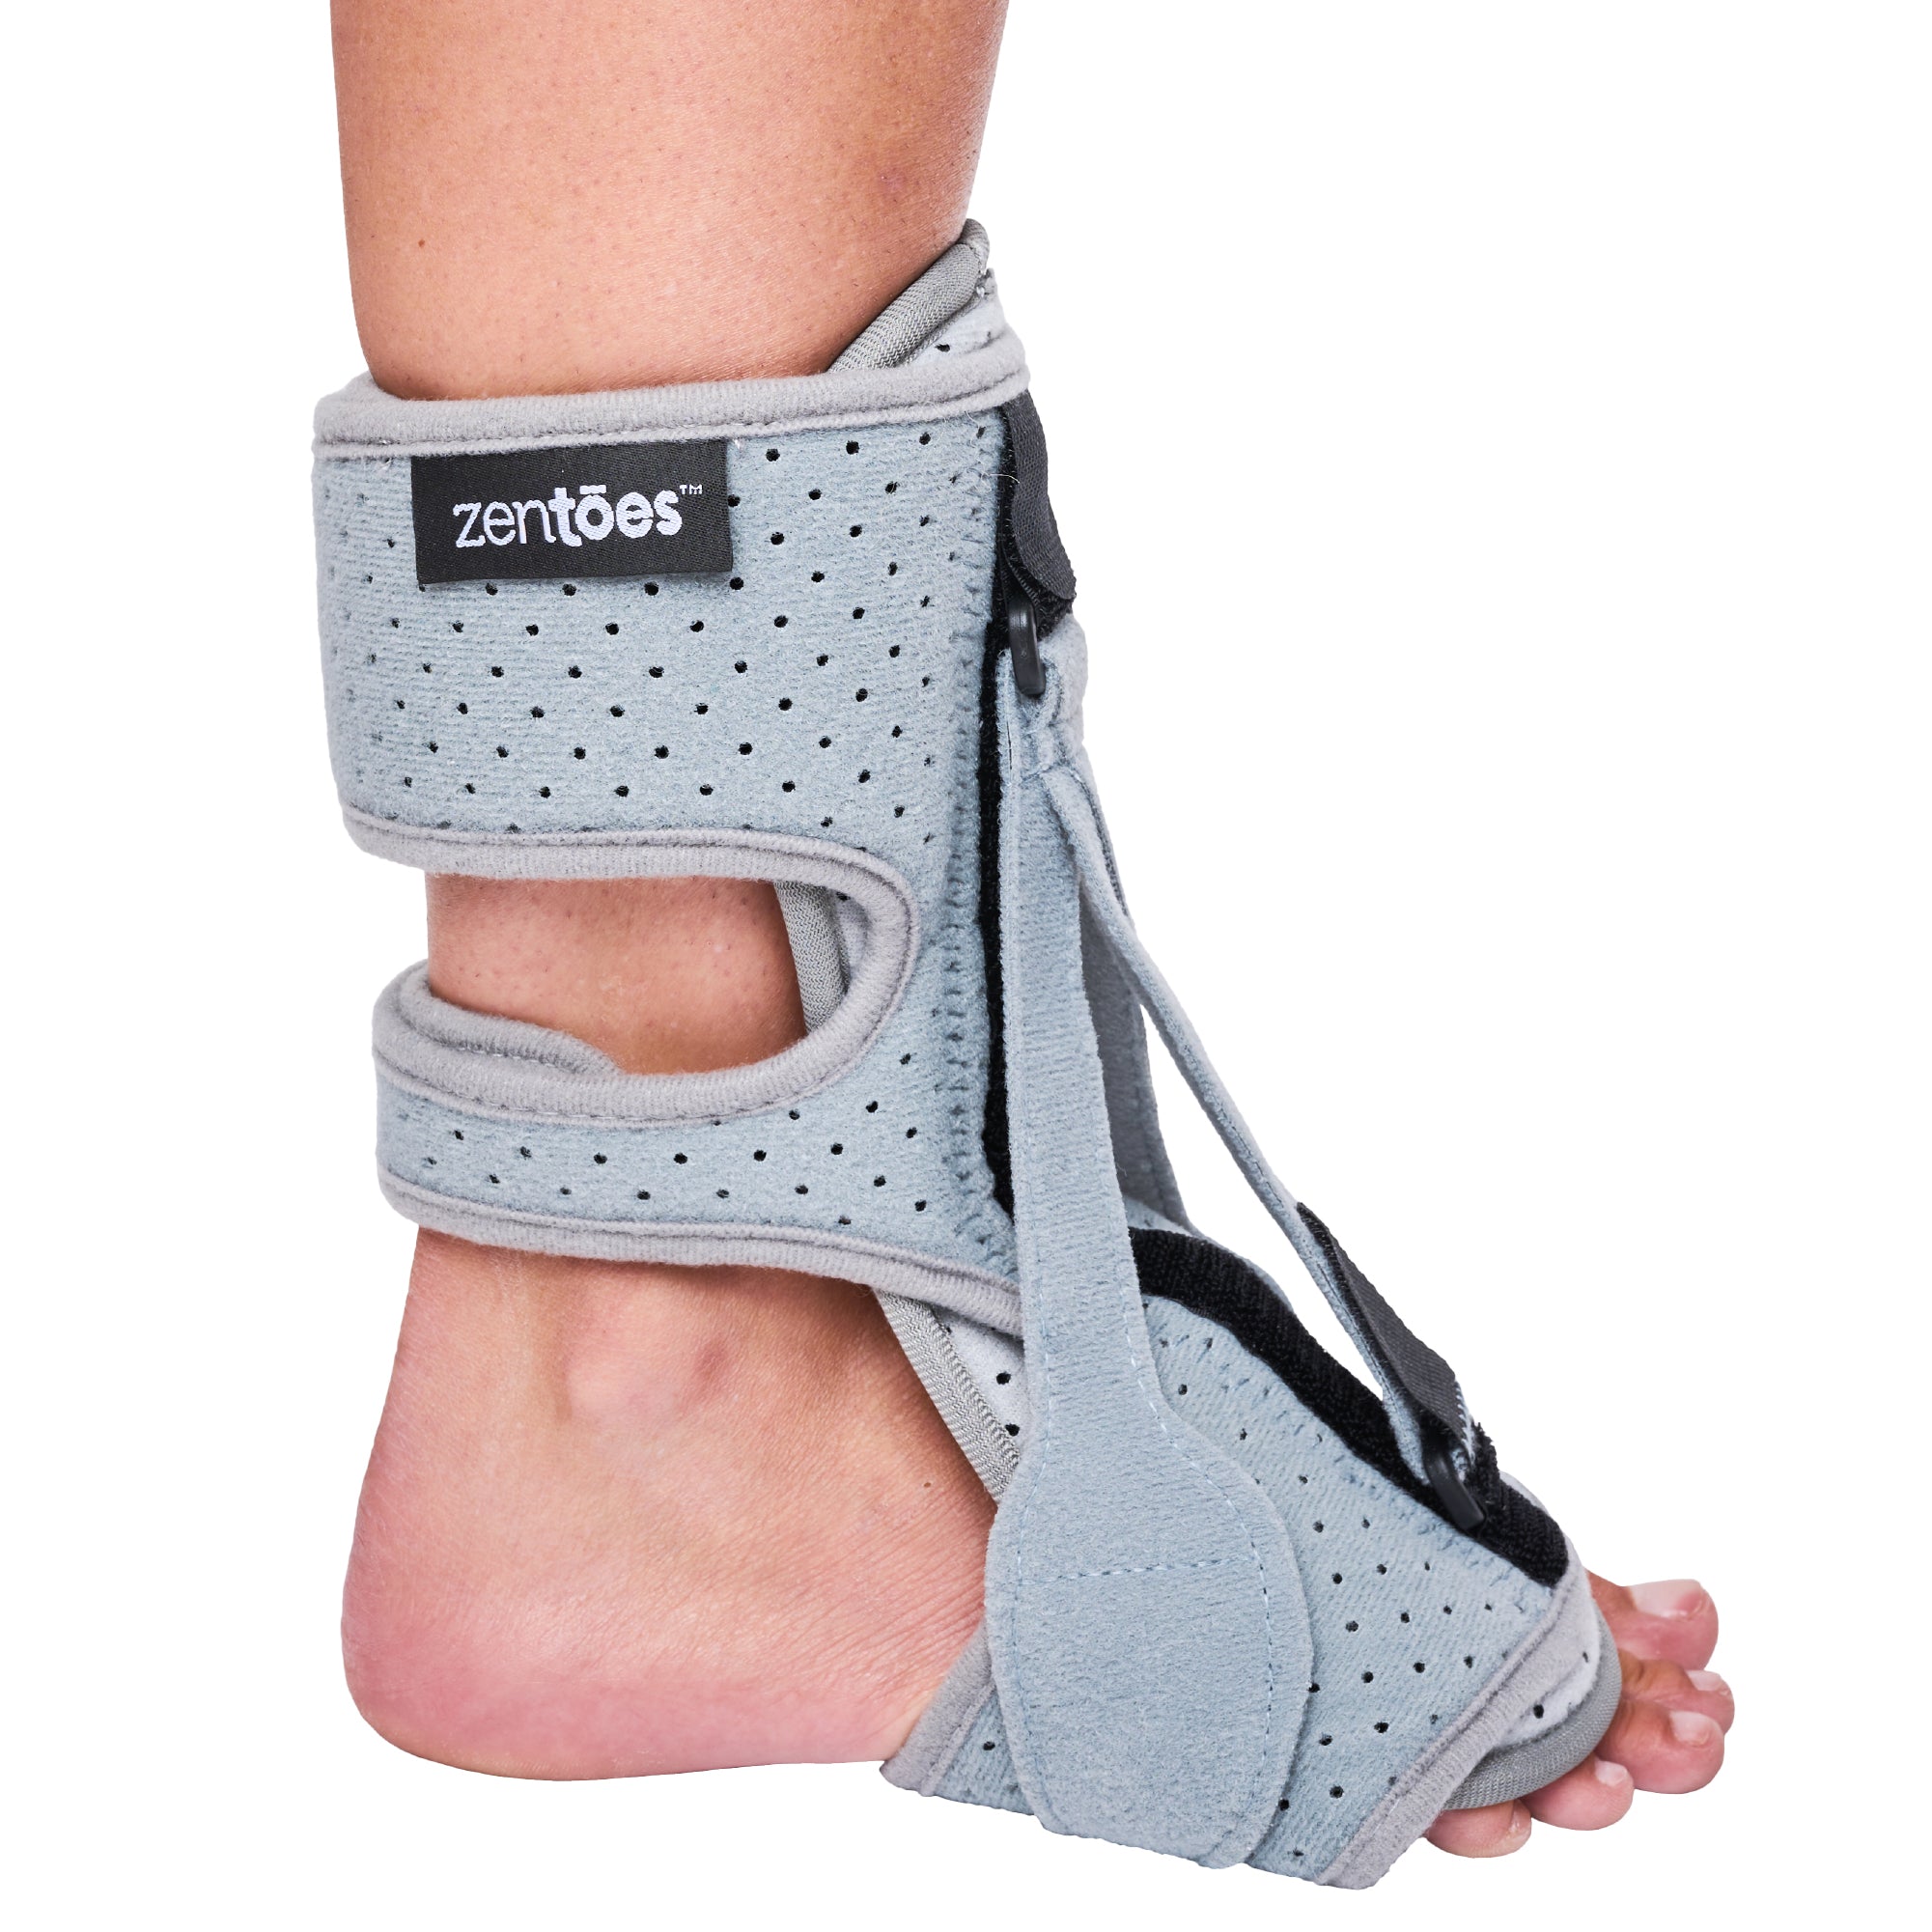 ZenToes Plantar Fasciitis Night Splint for Morning Foot Pain Relief